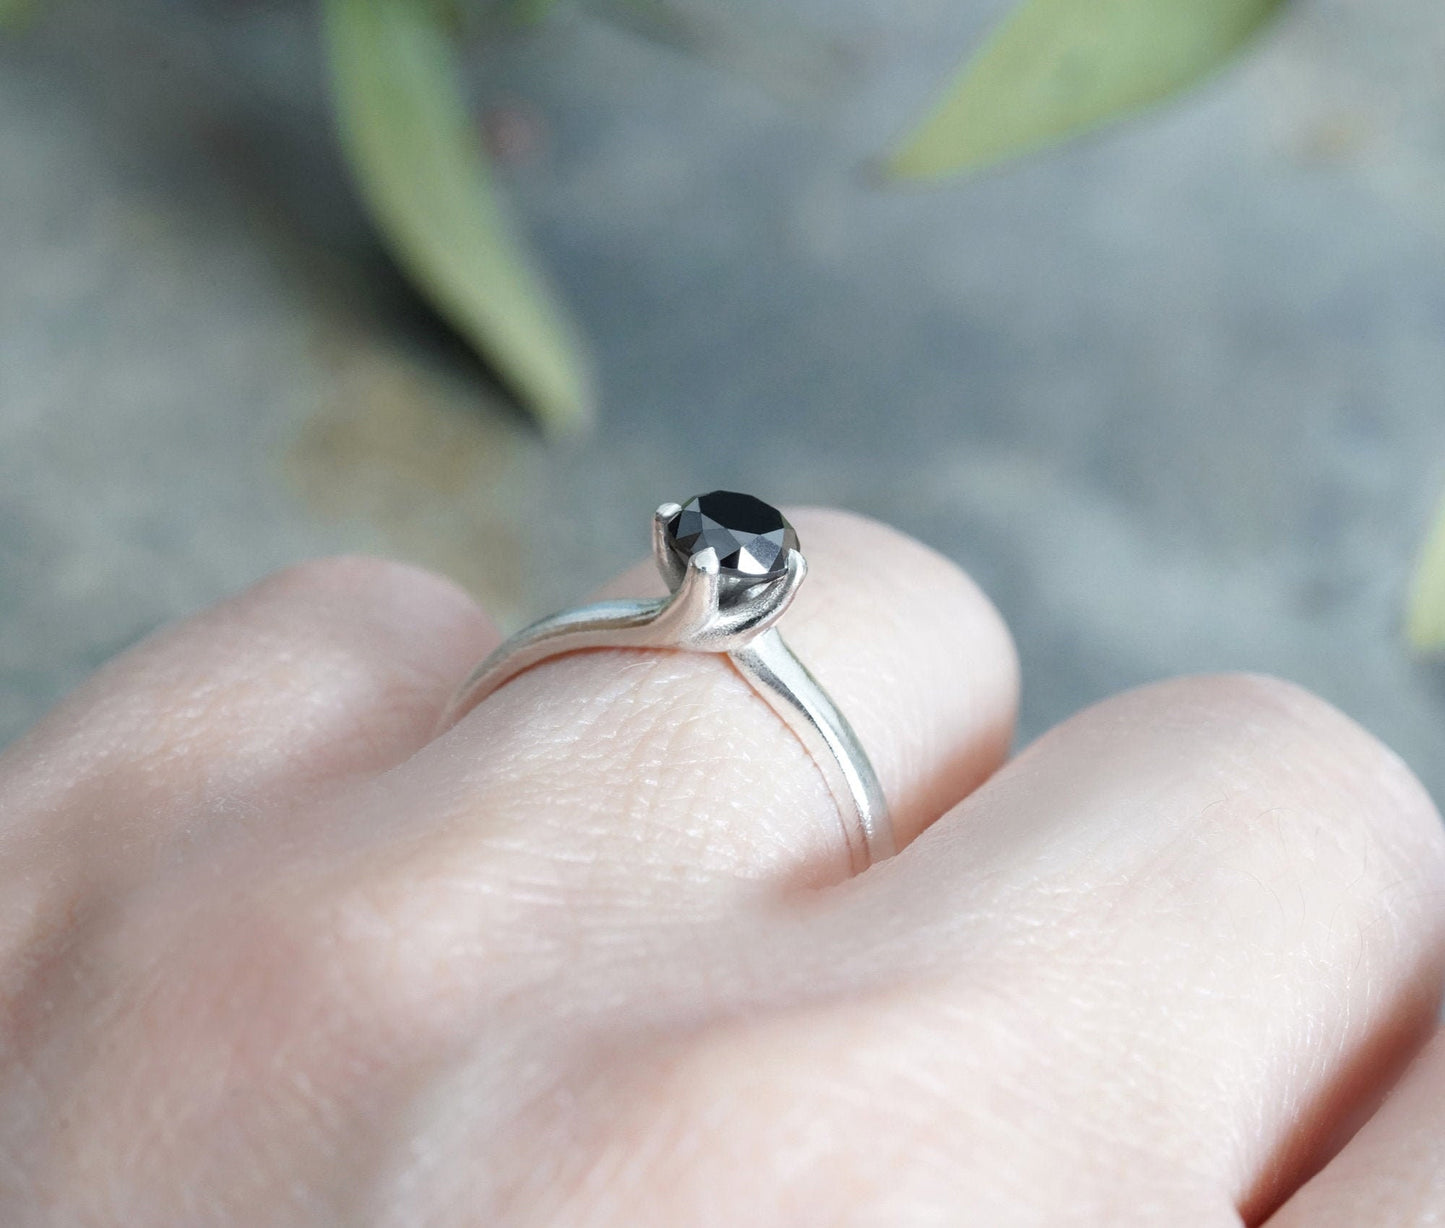 5mm Black Diamond Engagement Ring, Round Diamond Solitaire Ring, Prong Set Diamond Ring